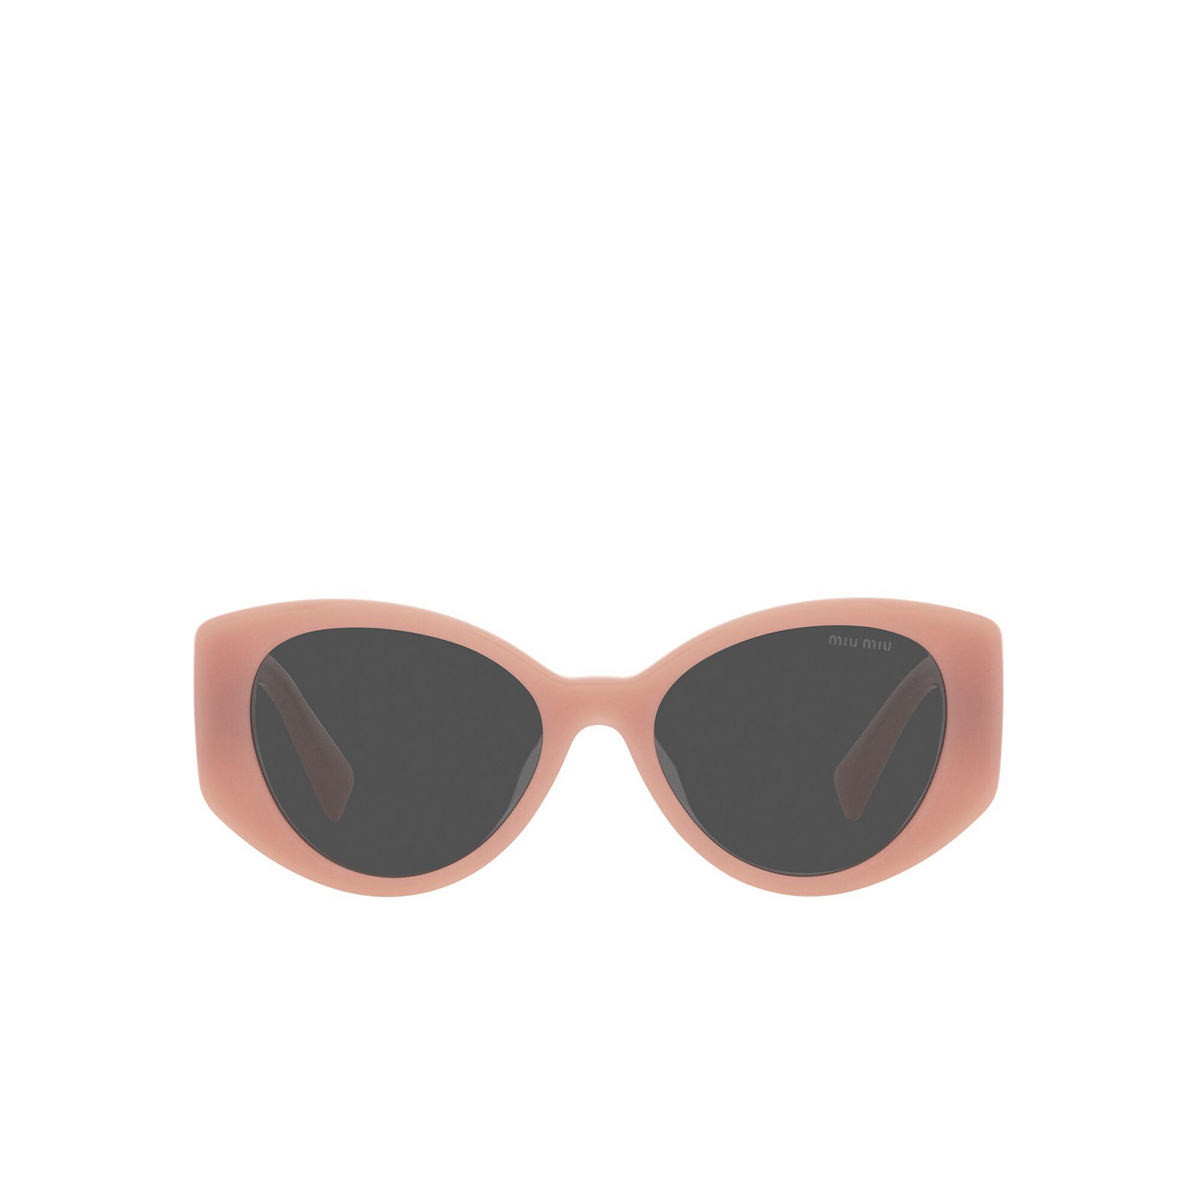 Miu Miu® Cat-eye Sunglasses: MU 03WS color Pink Opal 06X5S0 - front view.